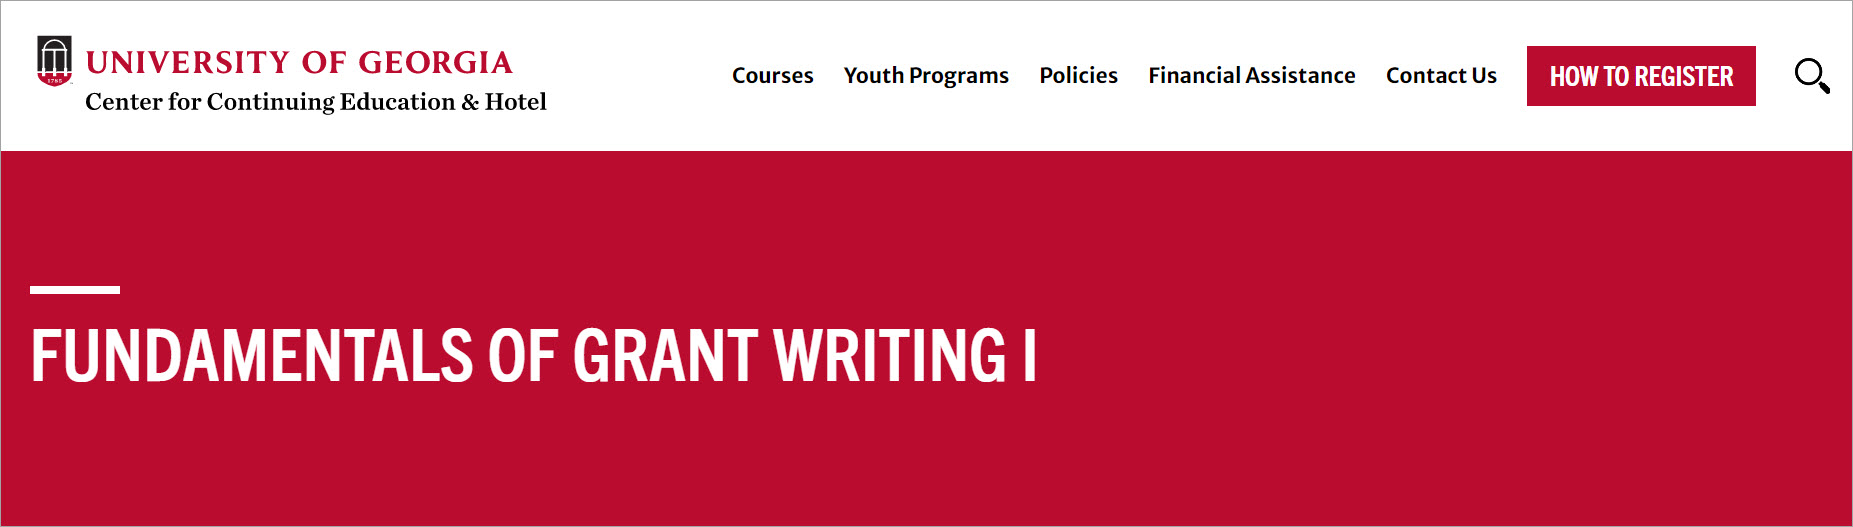 University of Georgia Grant Writing Course